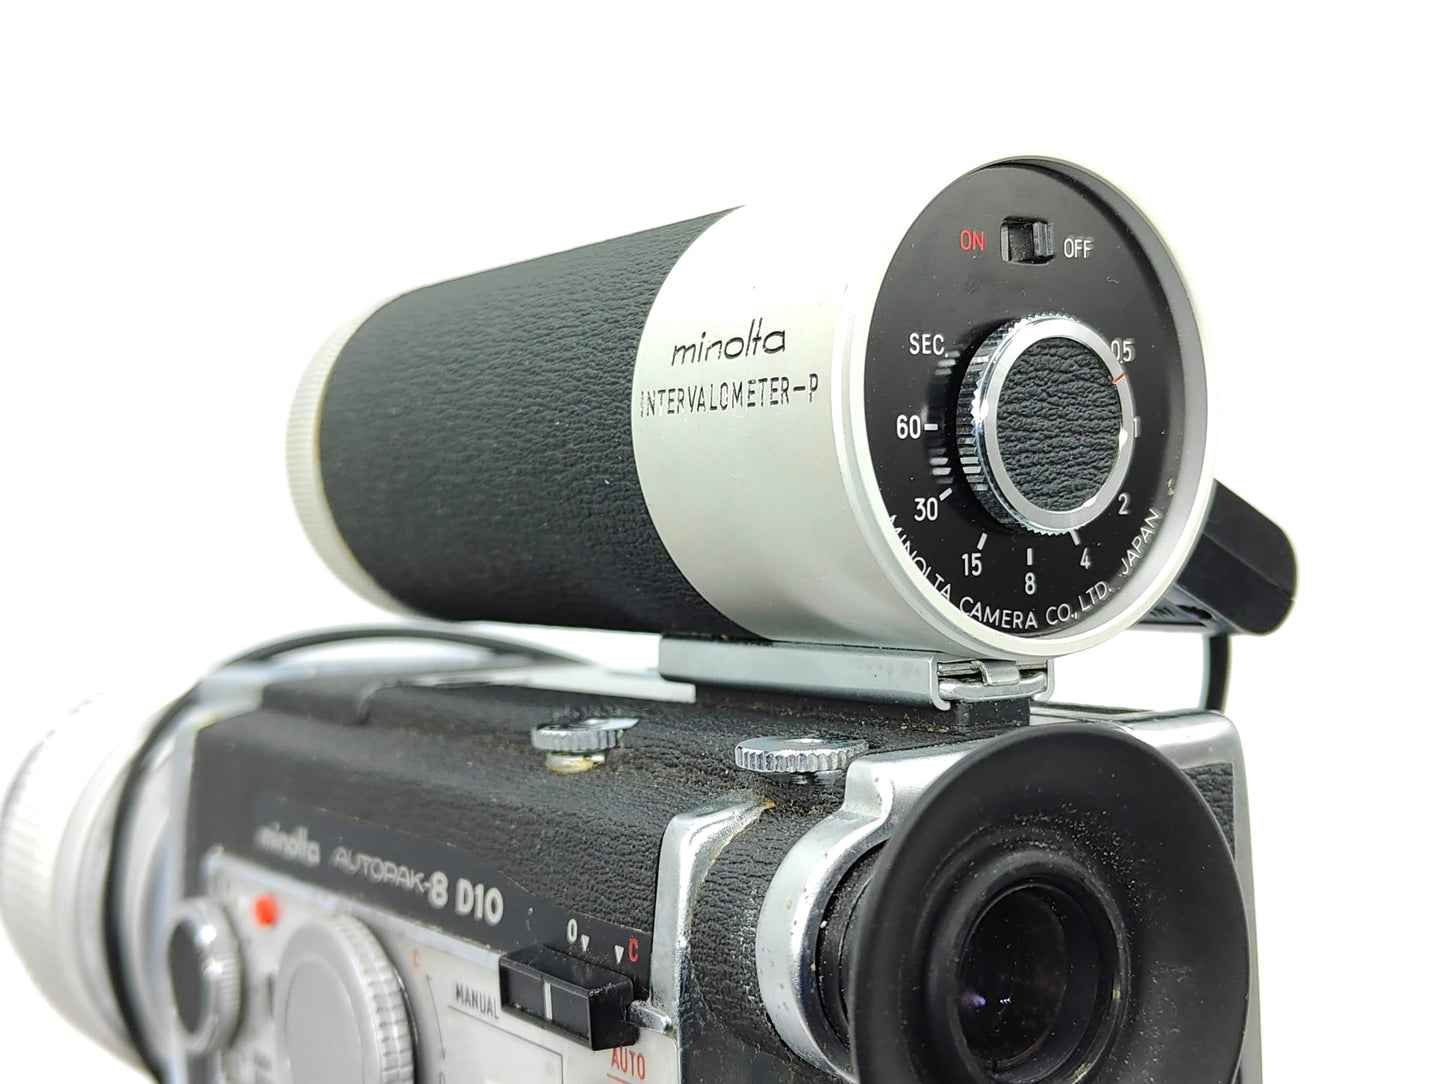 FULL SET - FILM TESTED Minolta Super-8 movie camera: Autopak-8 D10